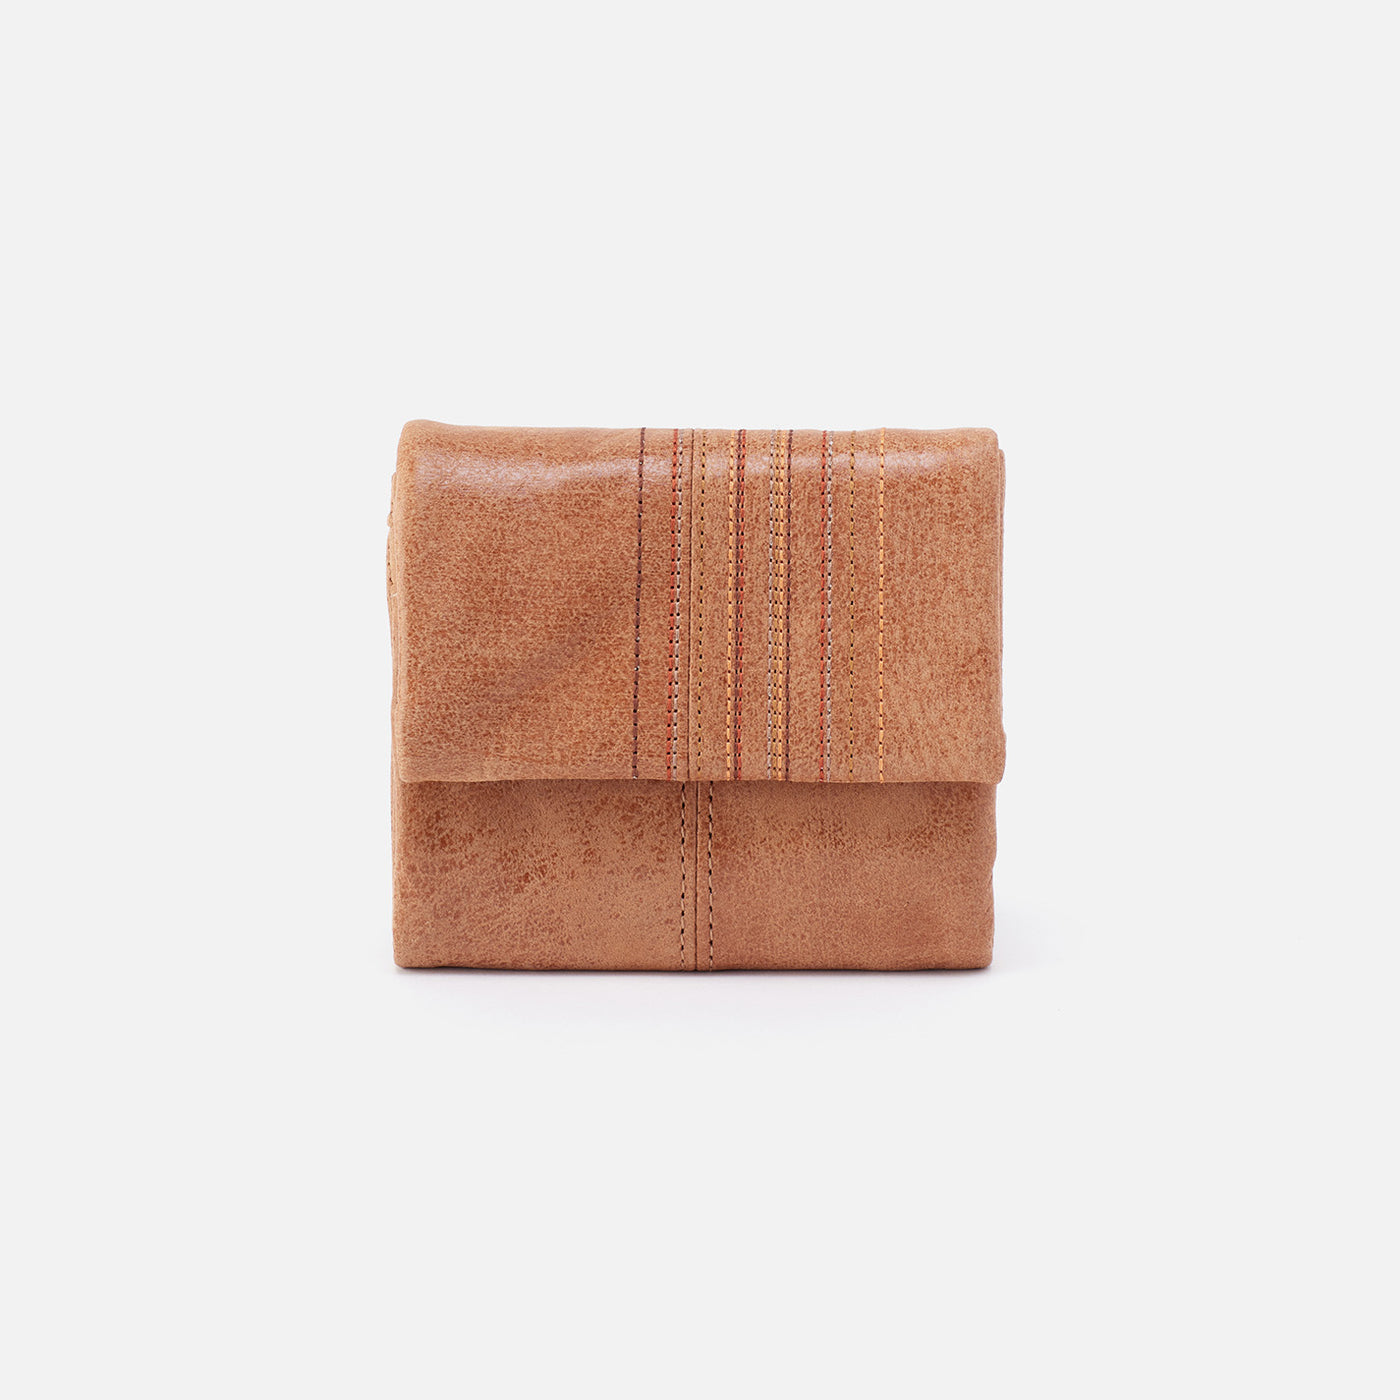 Keen Mini Trifold Compact Wallet in Buffed Leather - Tan